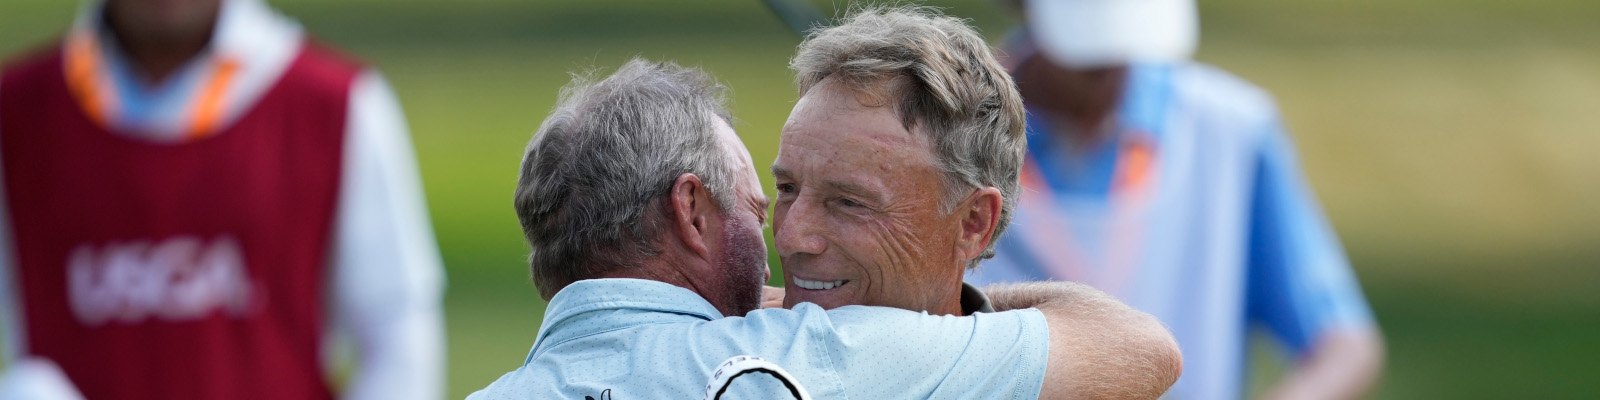 Jerry Kelly und Bernhard Langer (Photo by Patrick McDermott/Getty Images)